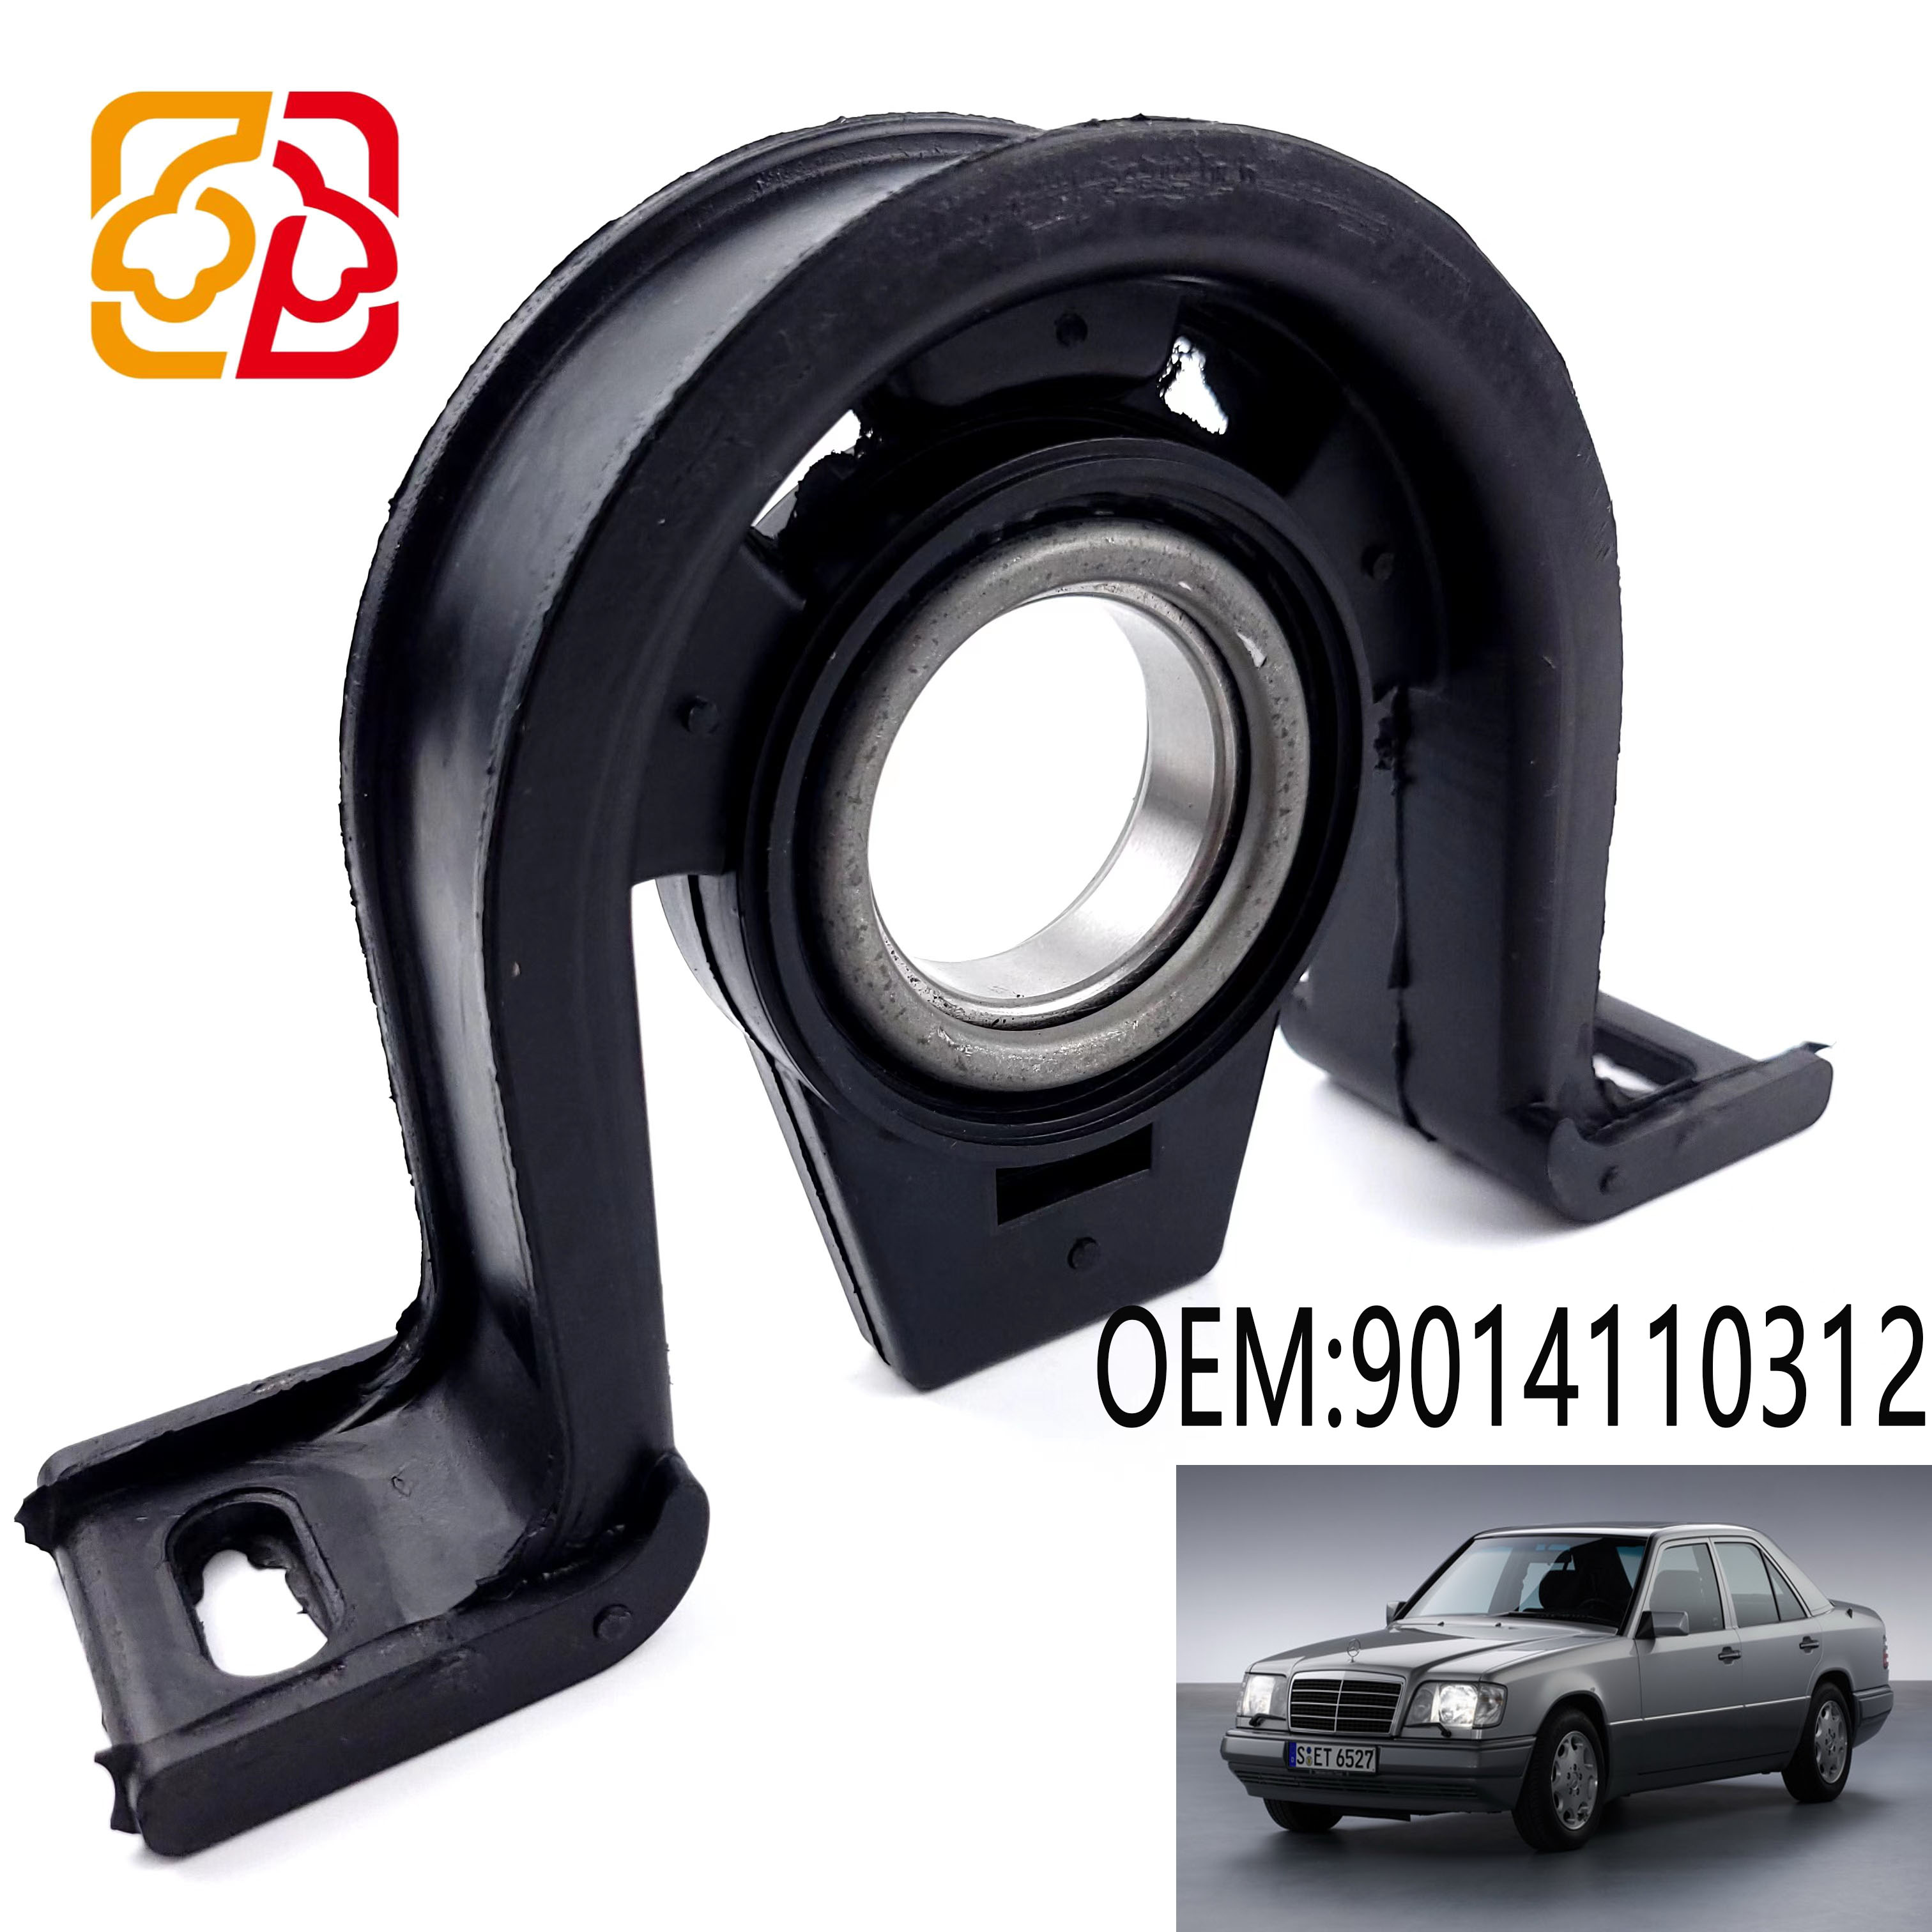 Drive shaft center support bearing OEM9014110312 for truck drivetrain